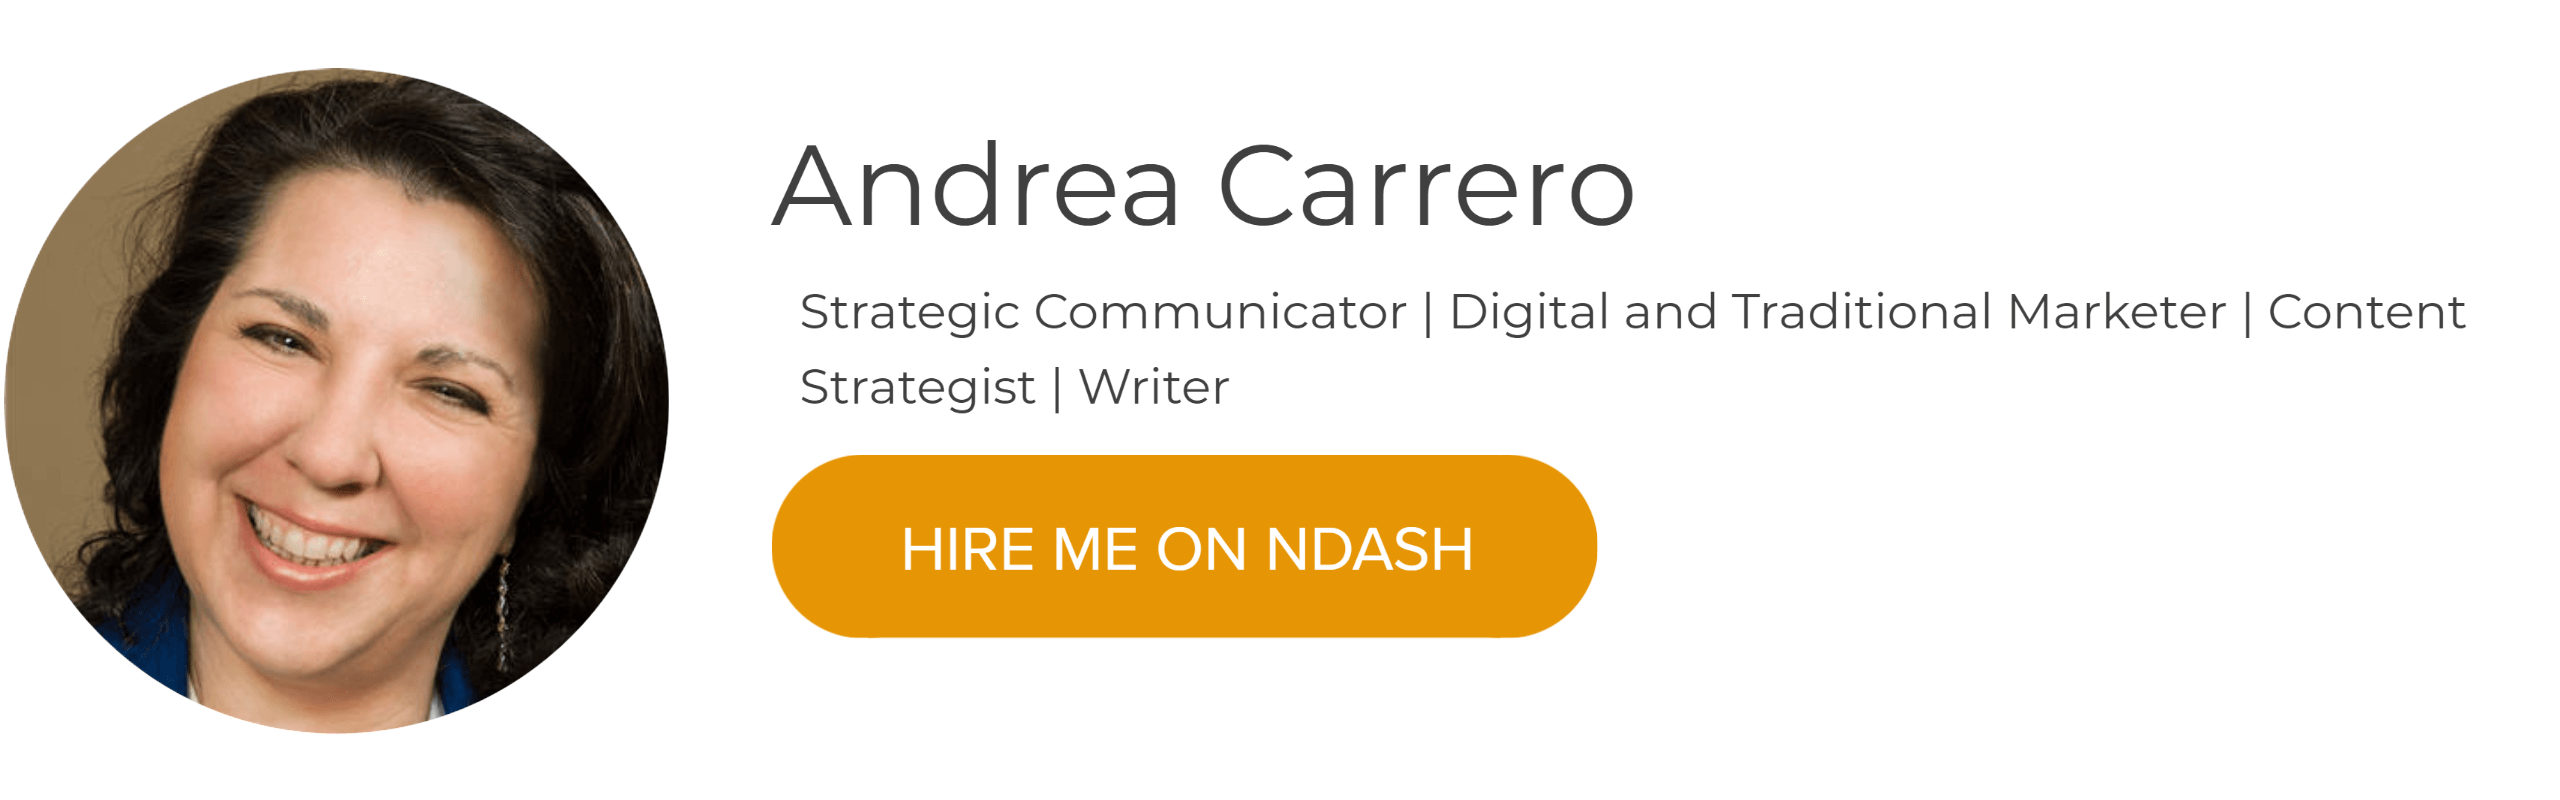 Meet data analytics writer - Andrea Carrero: Content Strategist & Freelance Writer